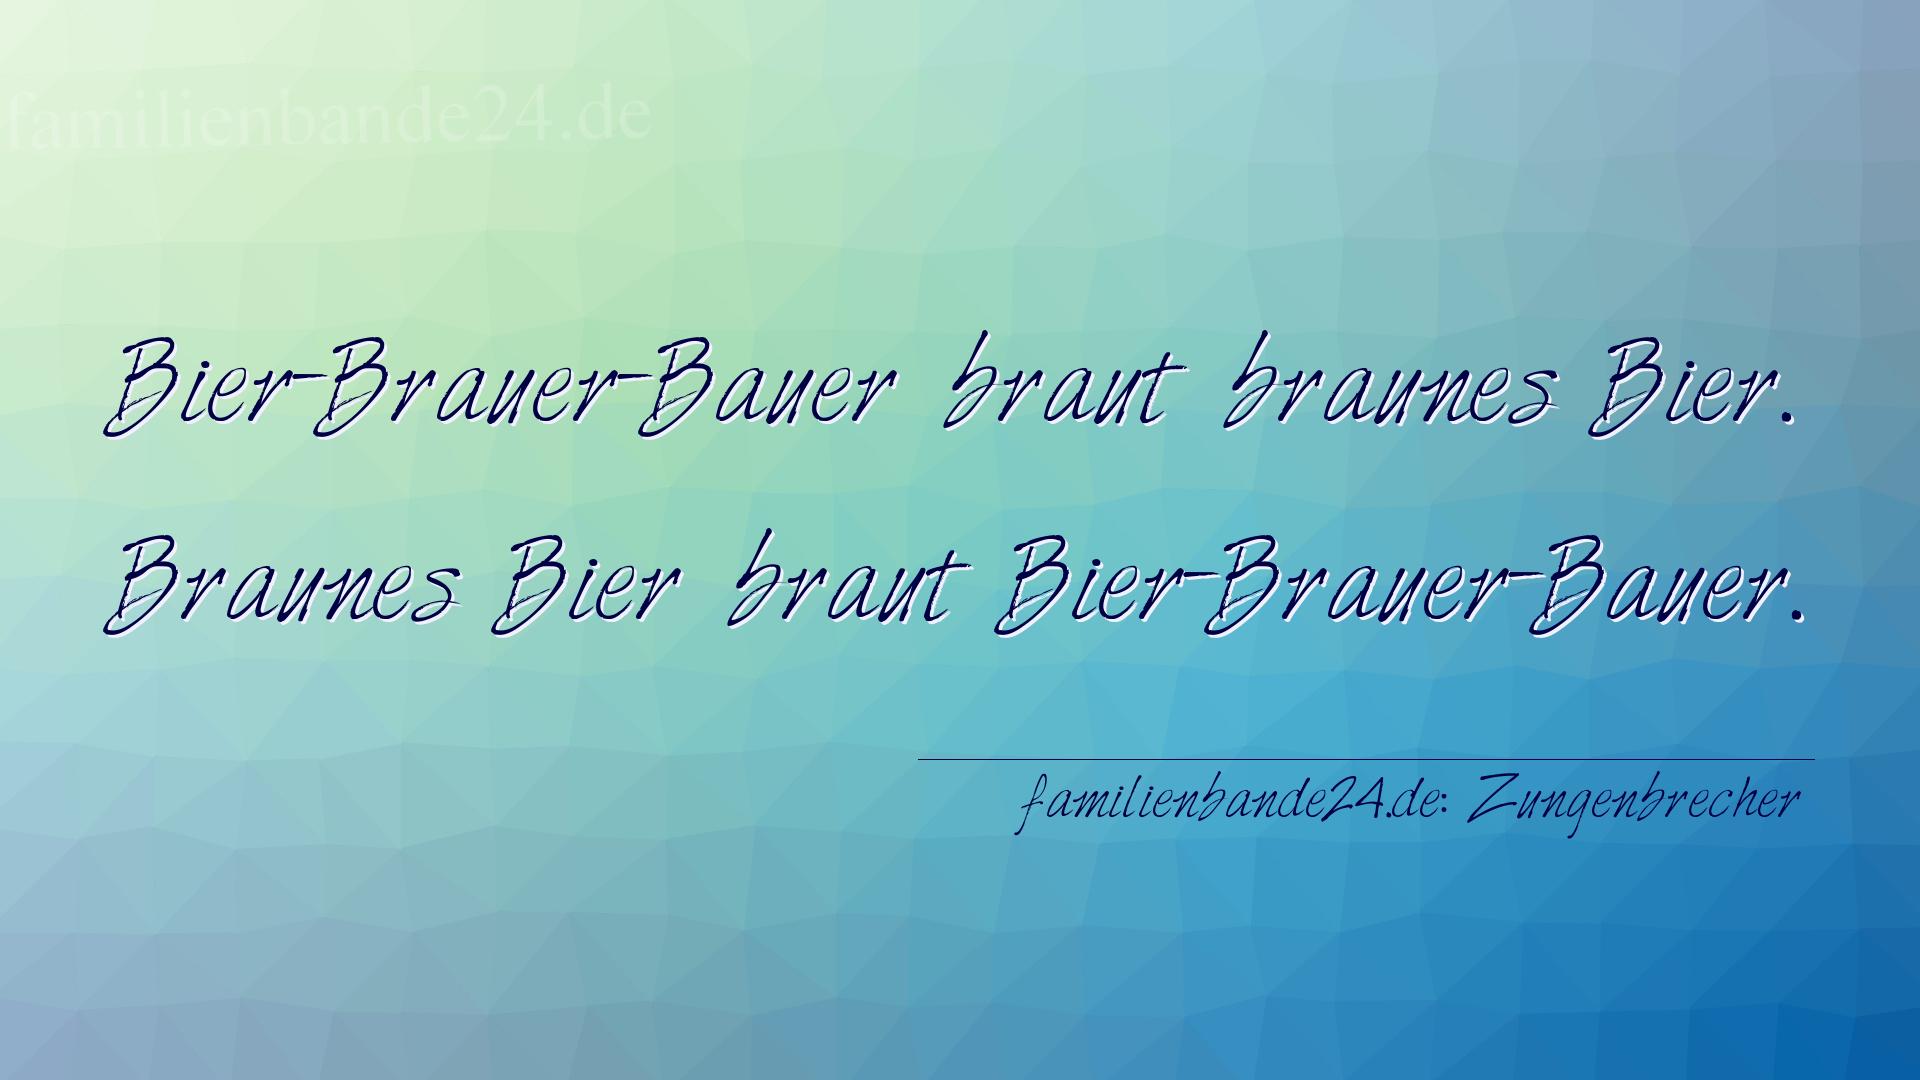 Zungenbrecher Nr. 1705: Bier-Brauer-Bauer braut braunes Bier.
Braunes Bier braut  [...]